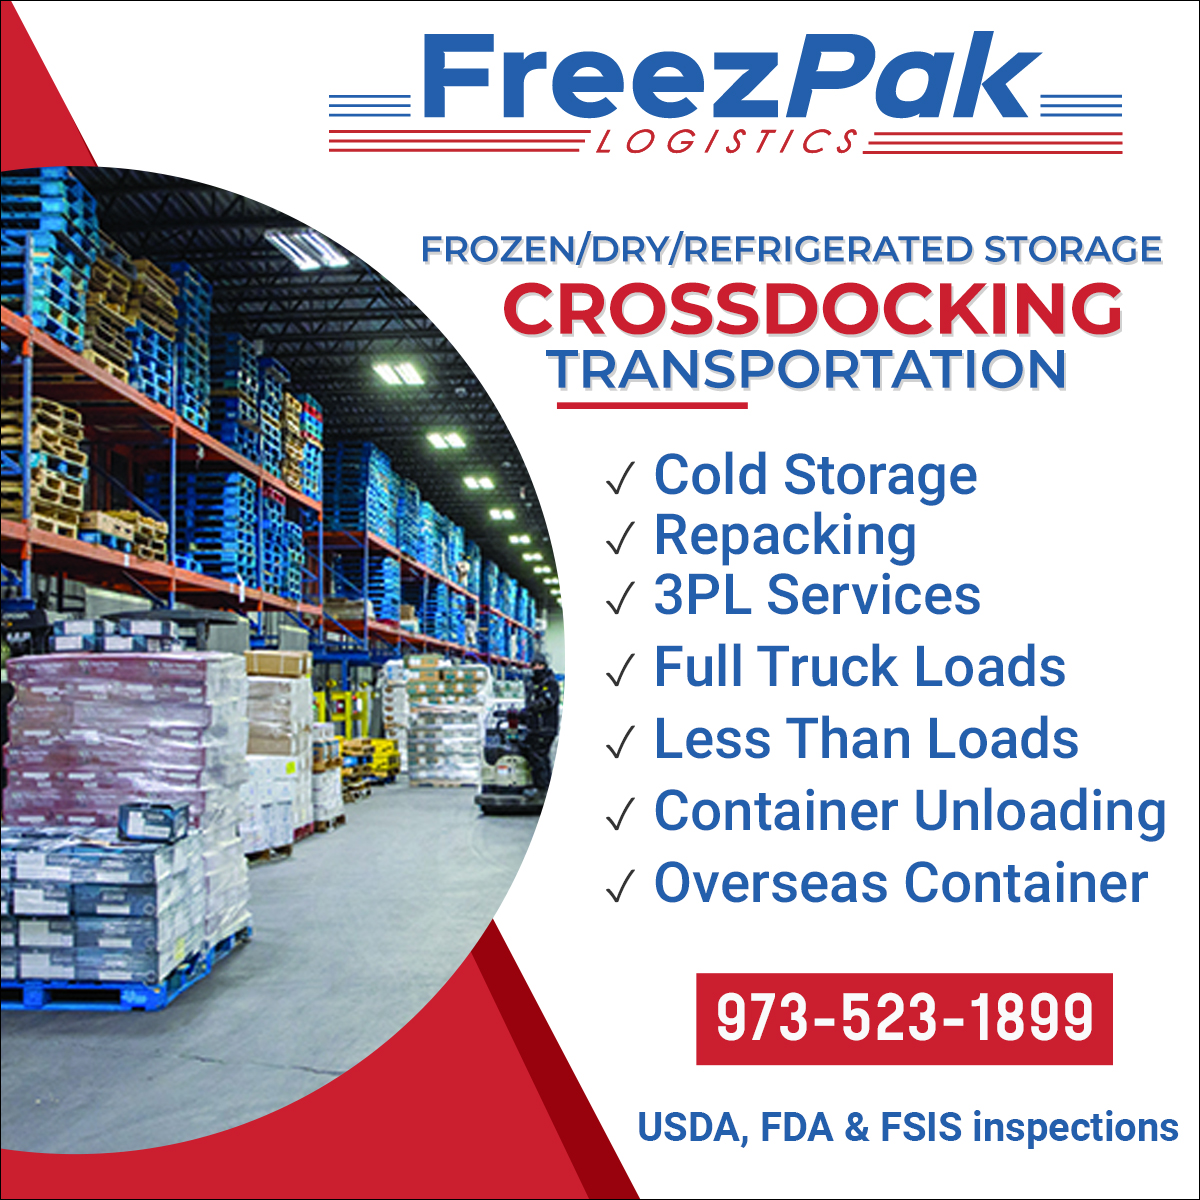 FreezPak Logistics